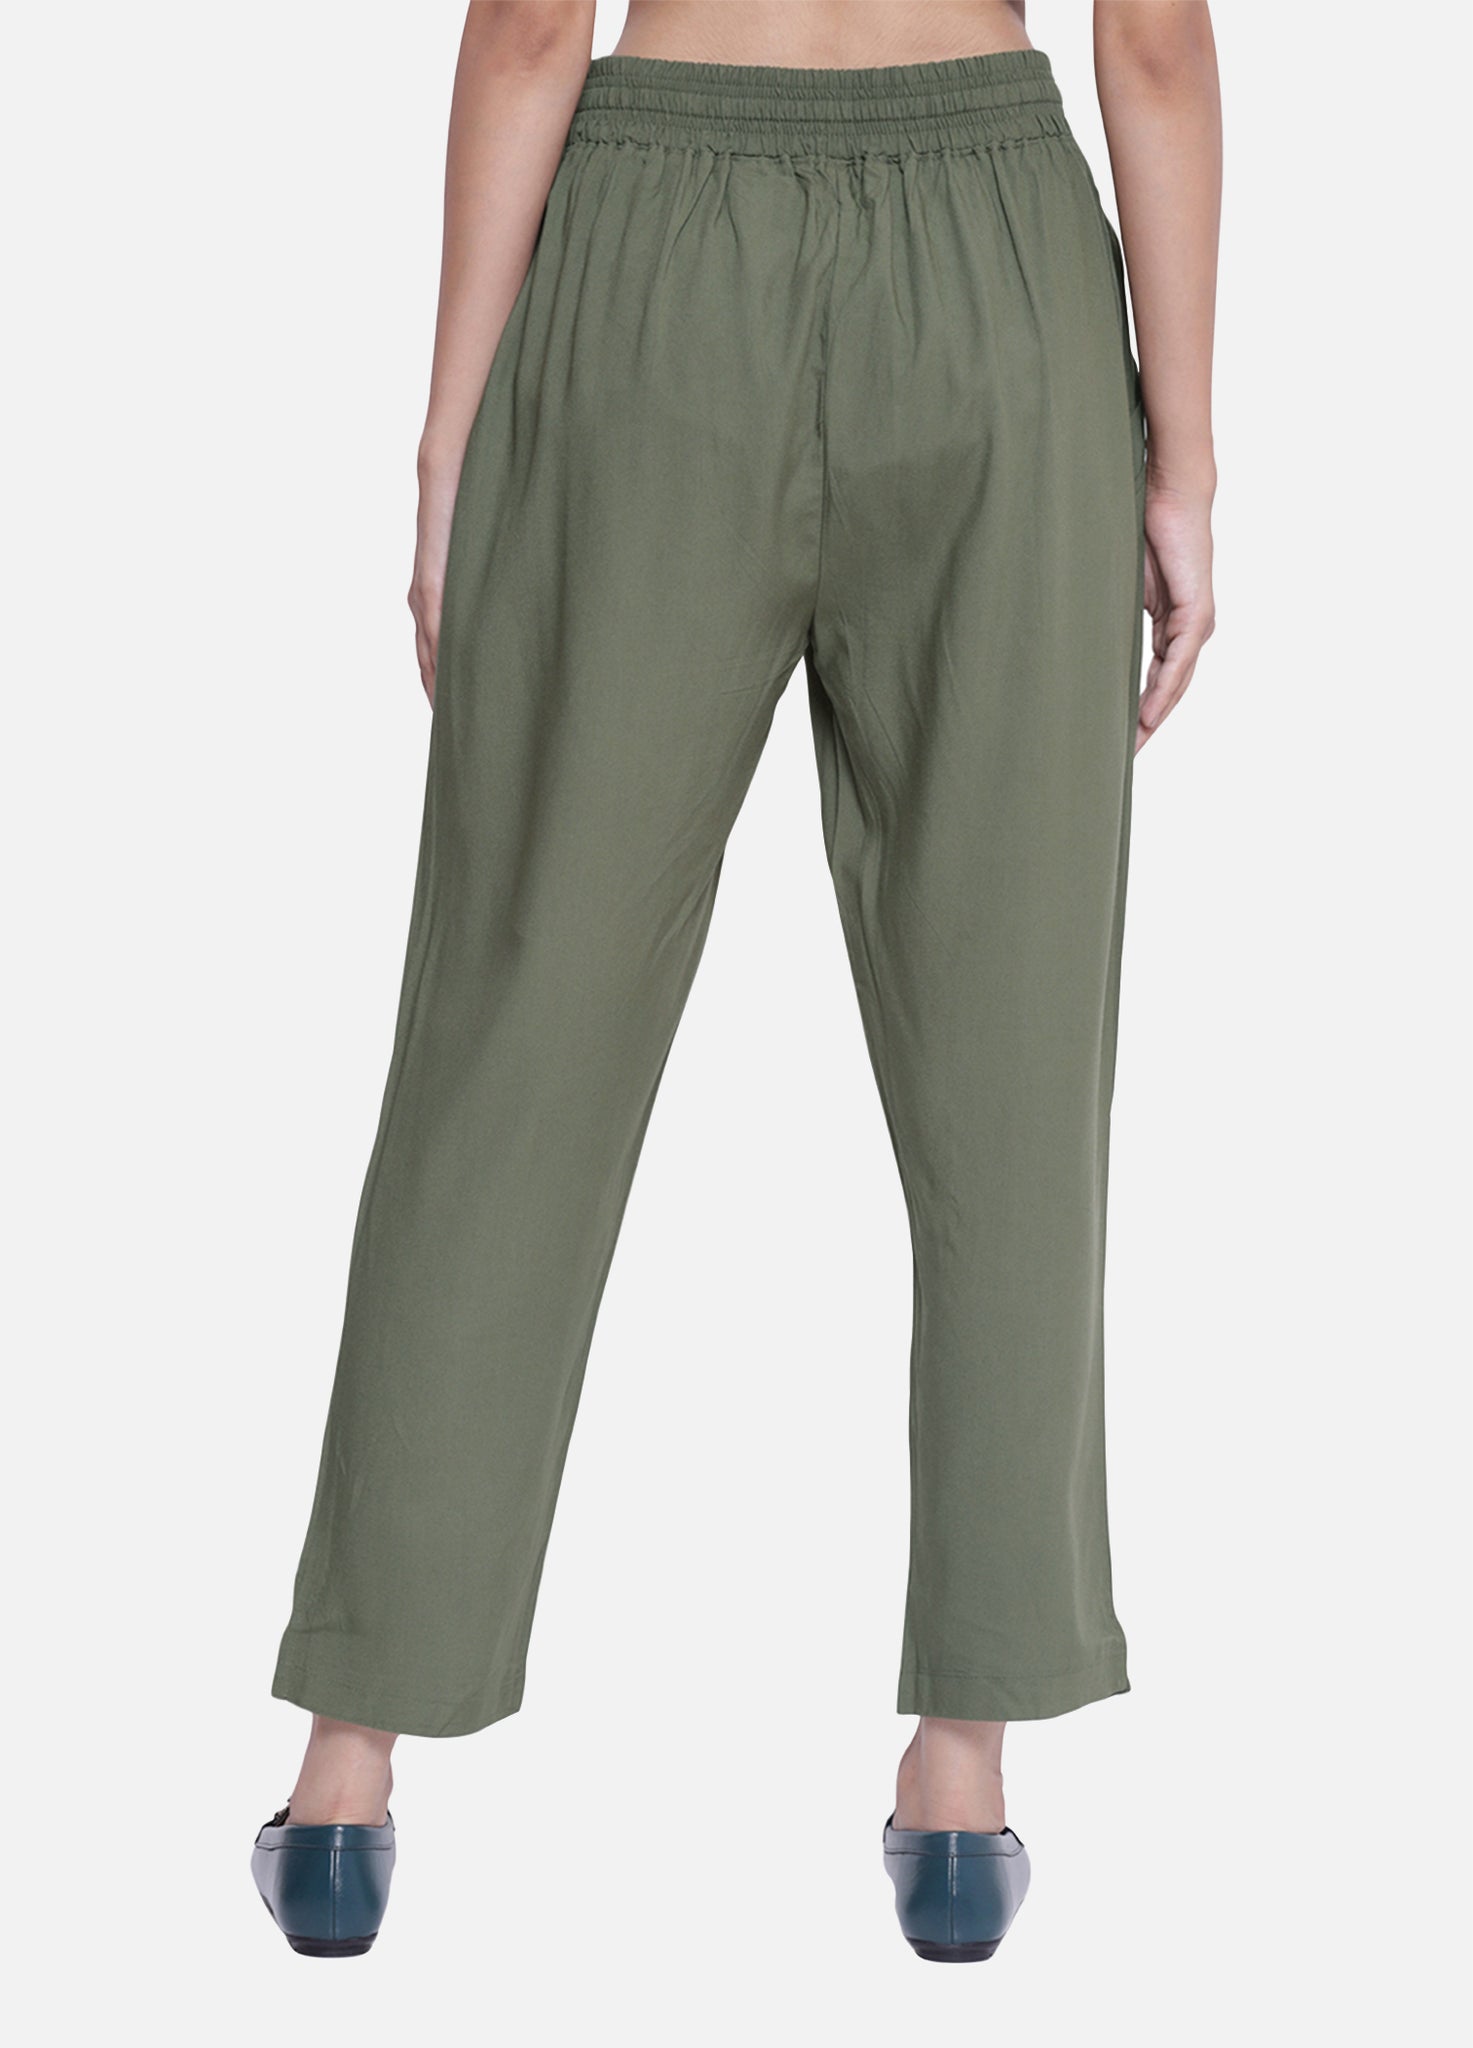 Buy FAB QUEENS Women's Slim Fit Cotton Straight Pants for Women Cigarette  Pants Bottom Wear Bottle Green at Amazon.in